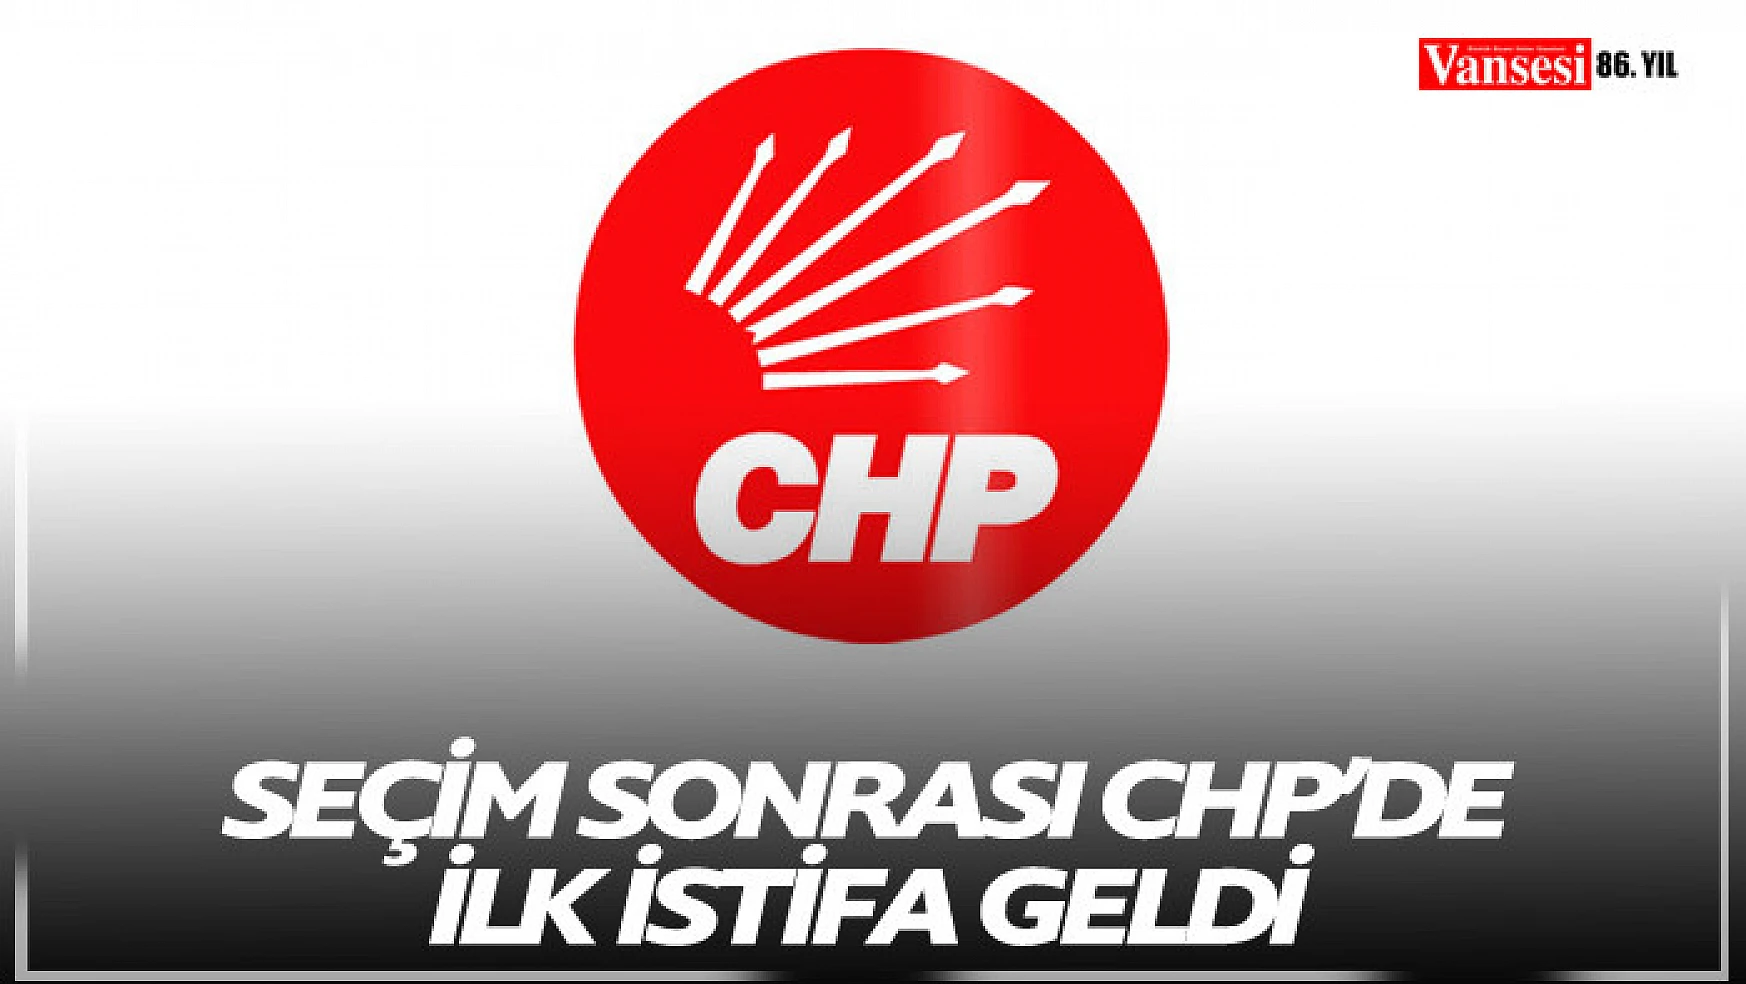 Seçim sonrası CHP'de ilk istifa geldi!